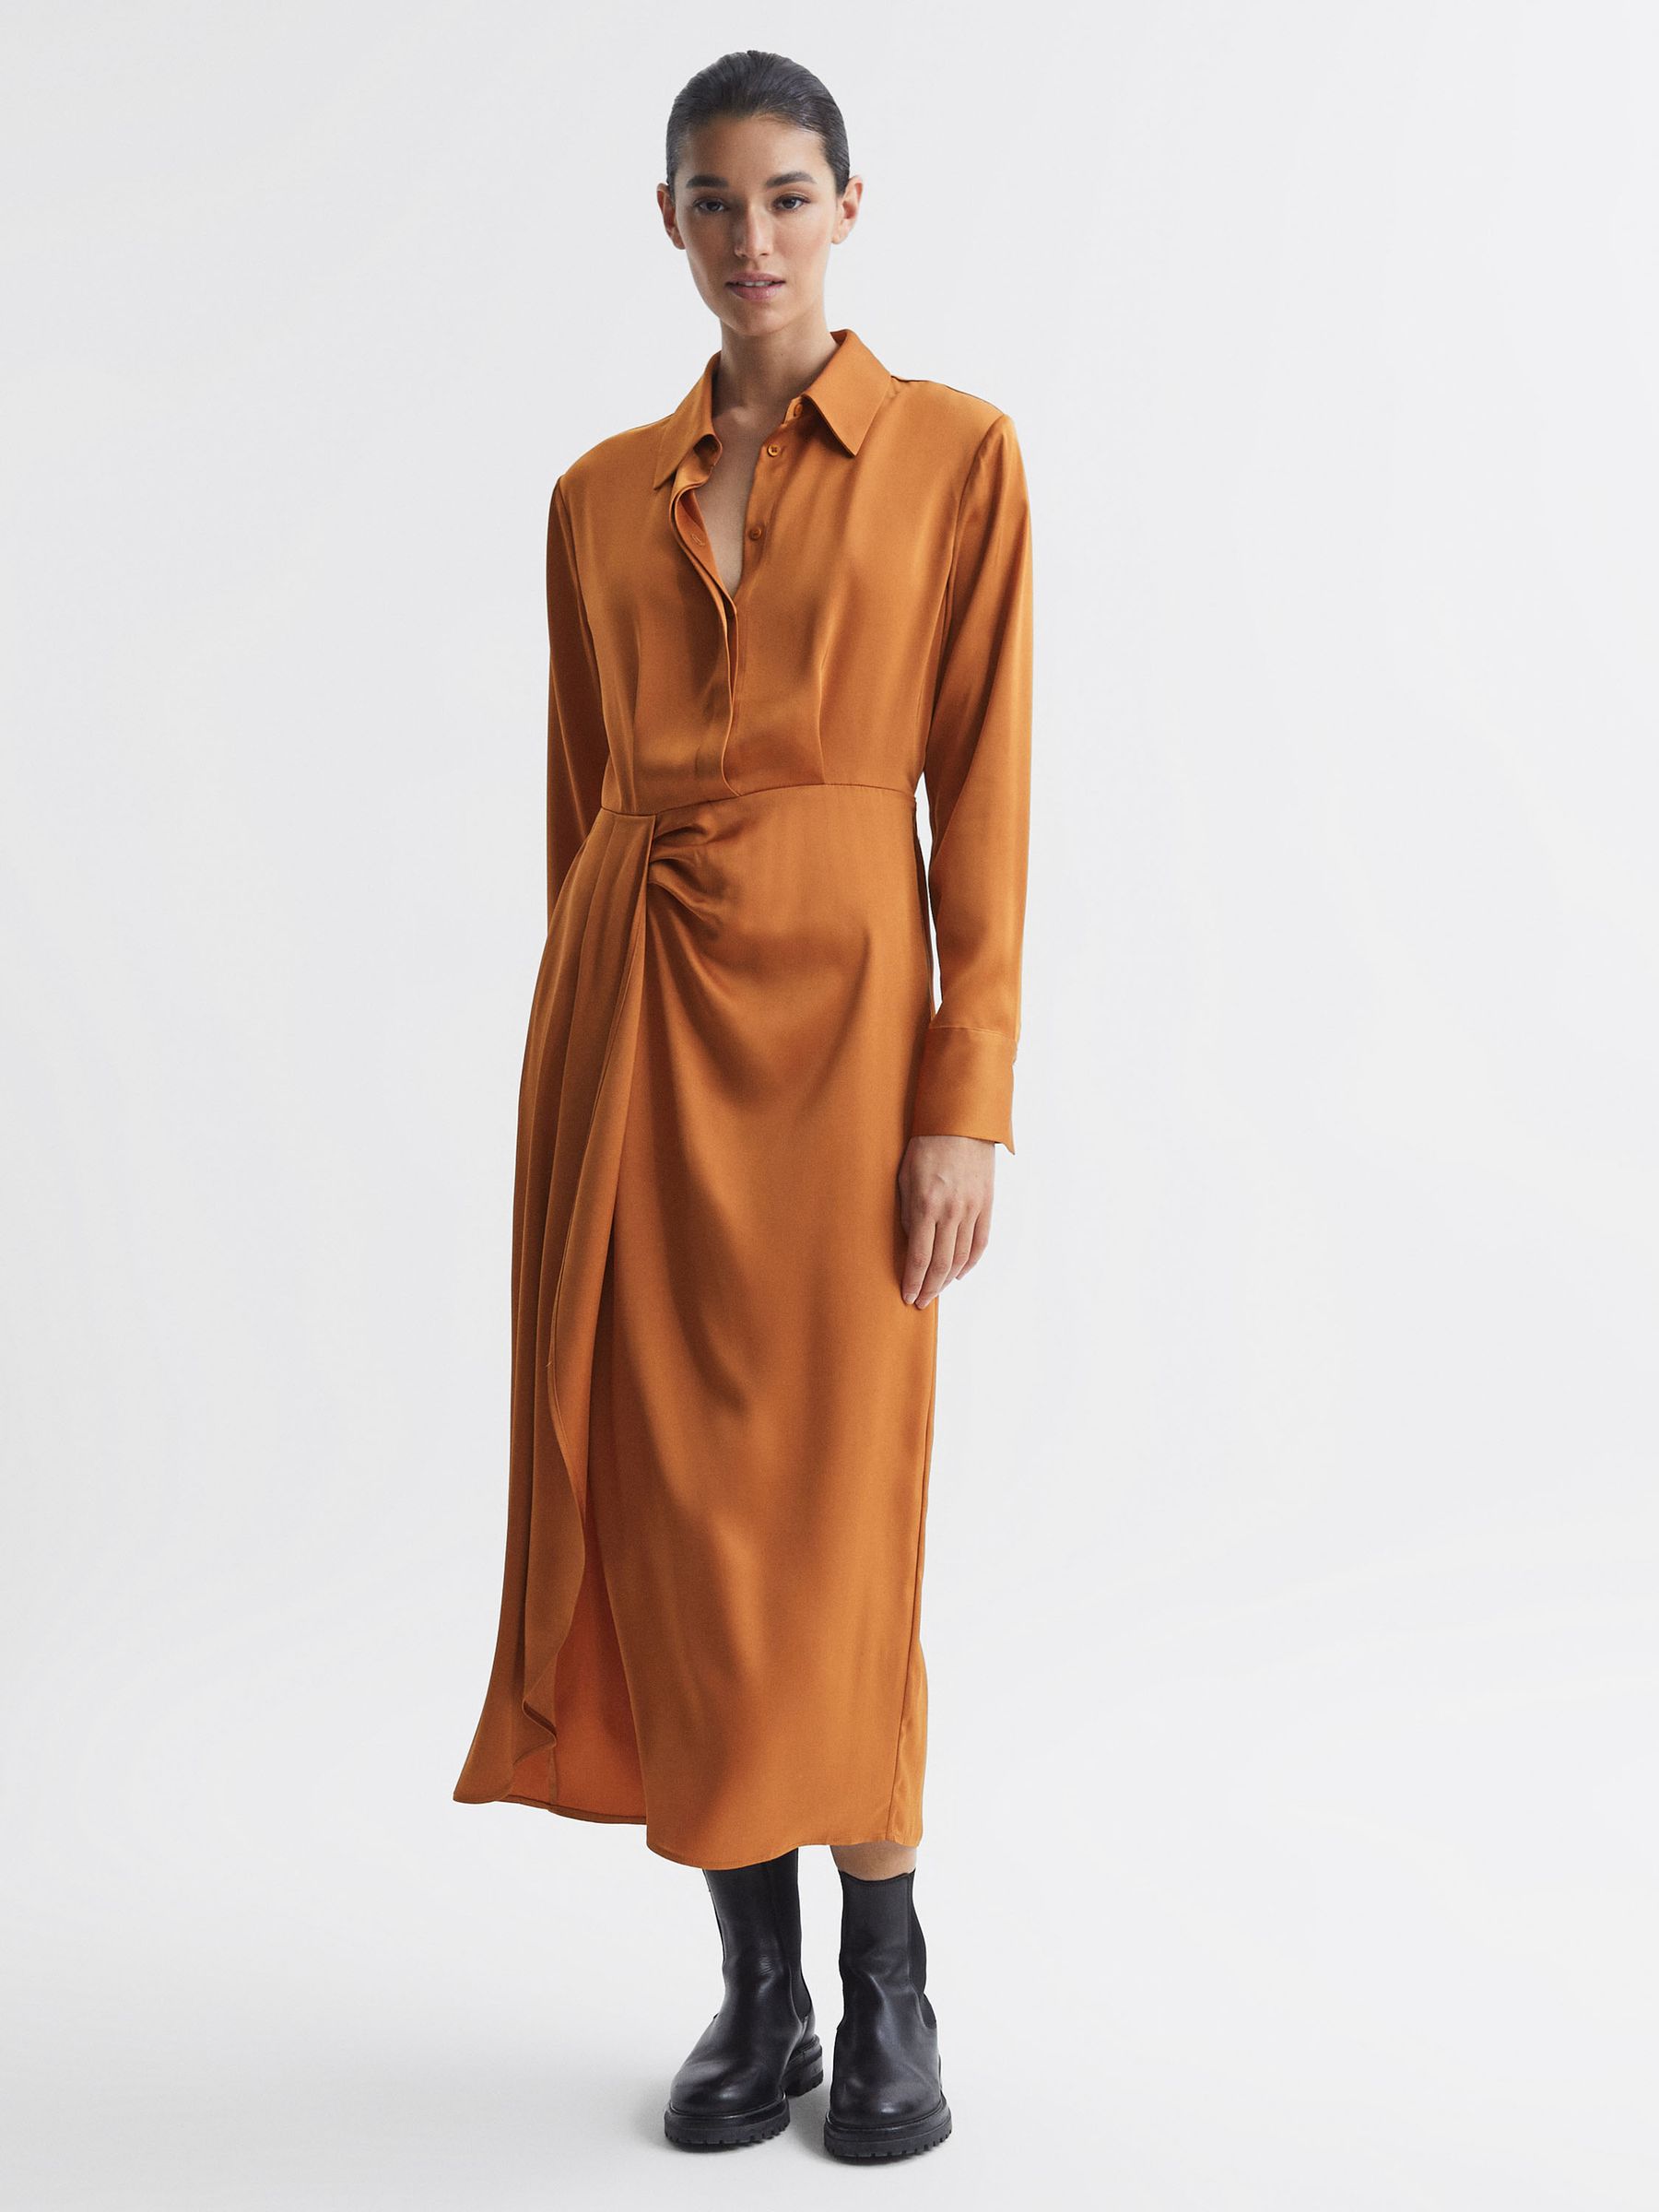 Reiss Arabella Satin Shirt-Style Midi Dress | REISS USA